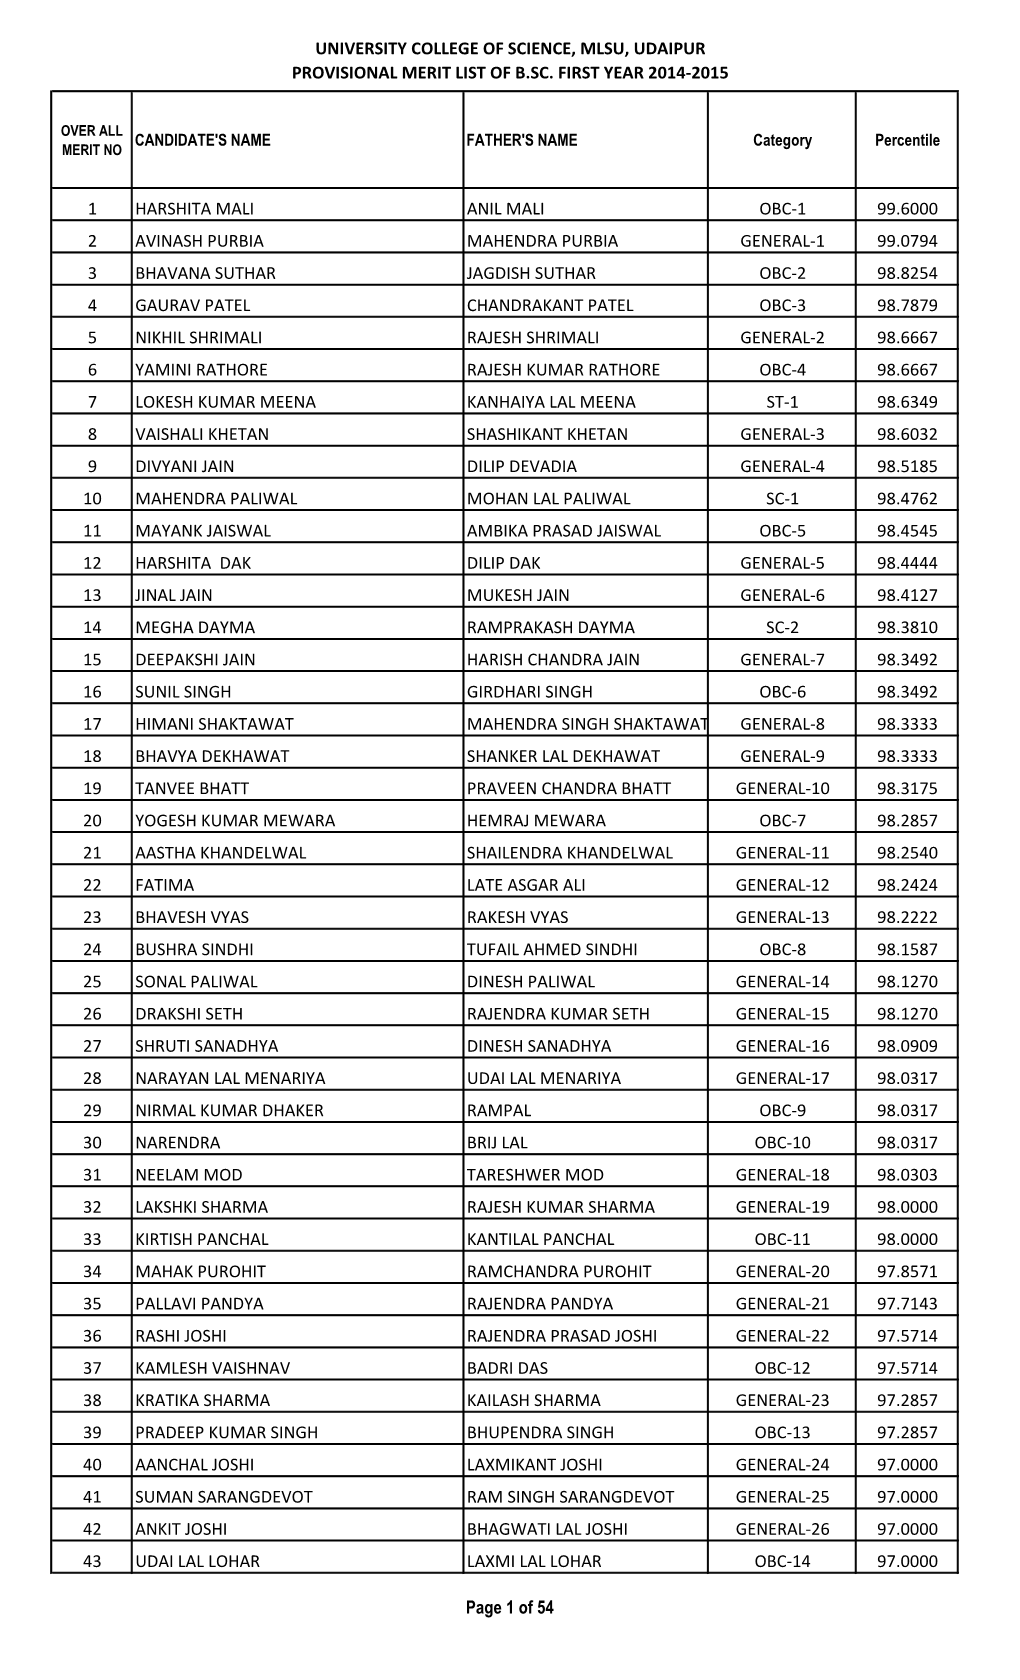 University College of Science, Mlsu, Udaipur Provisional Merit List of B.Sc